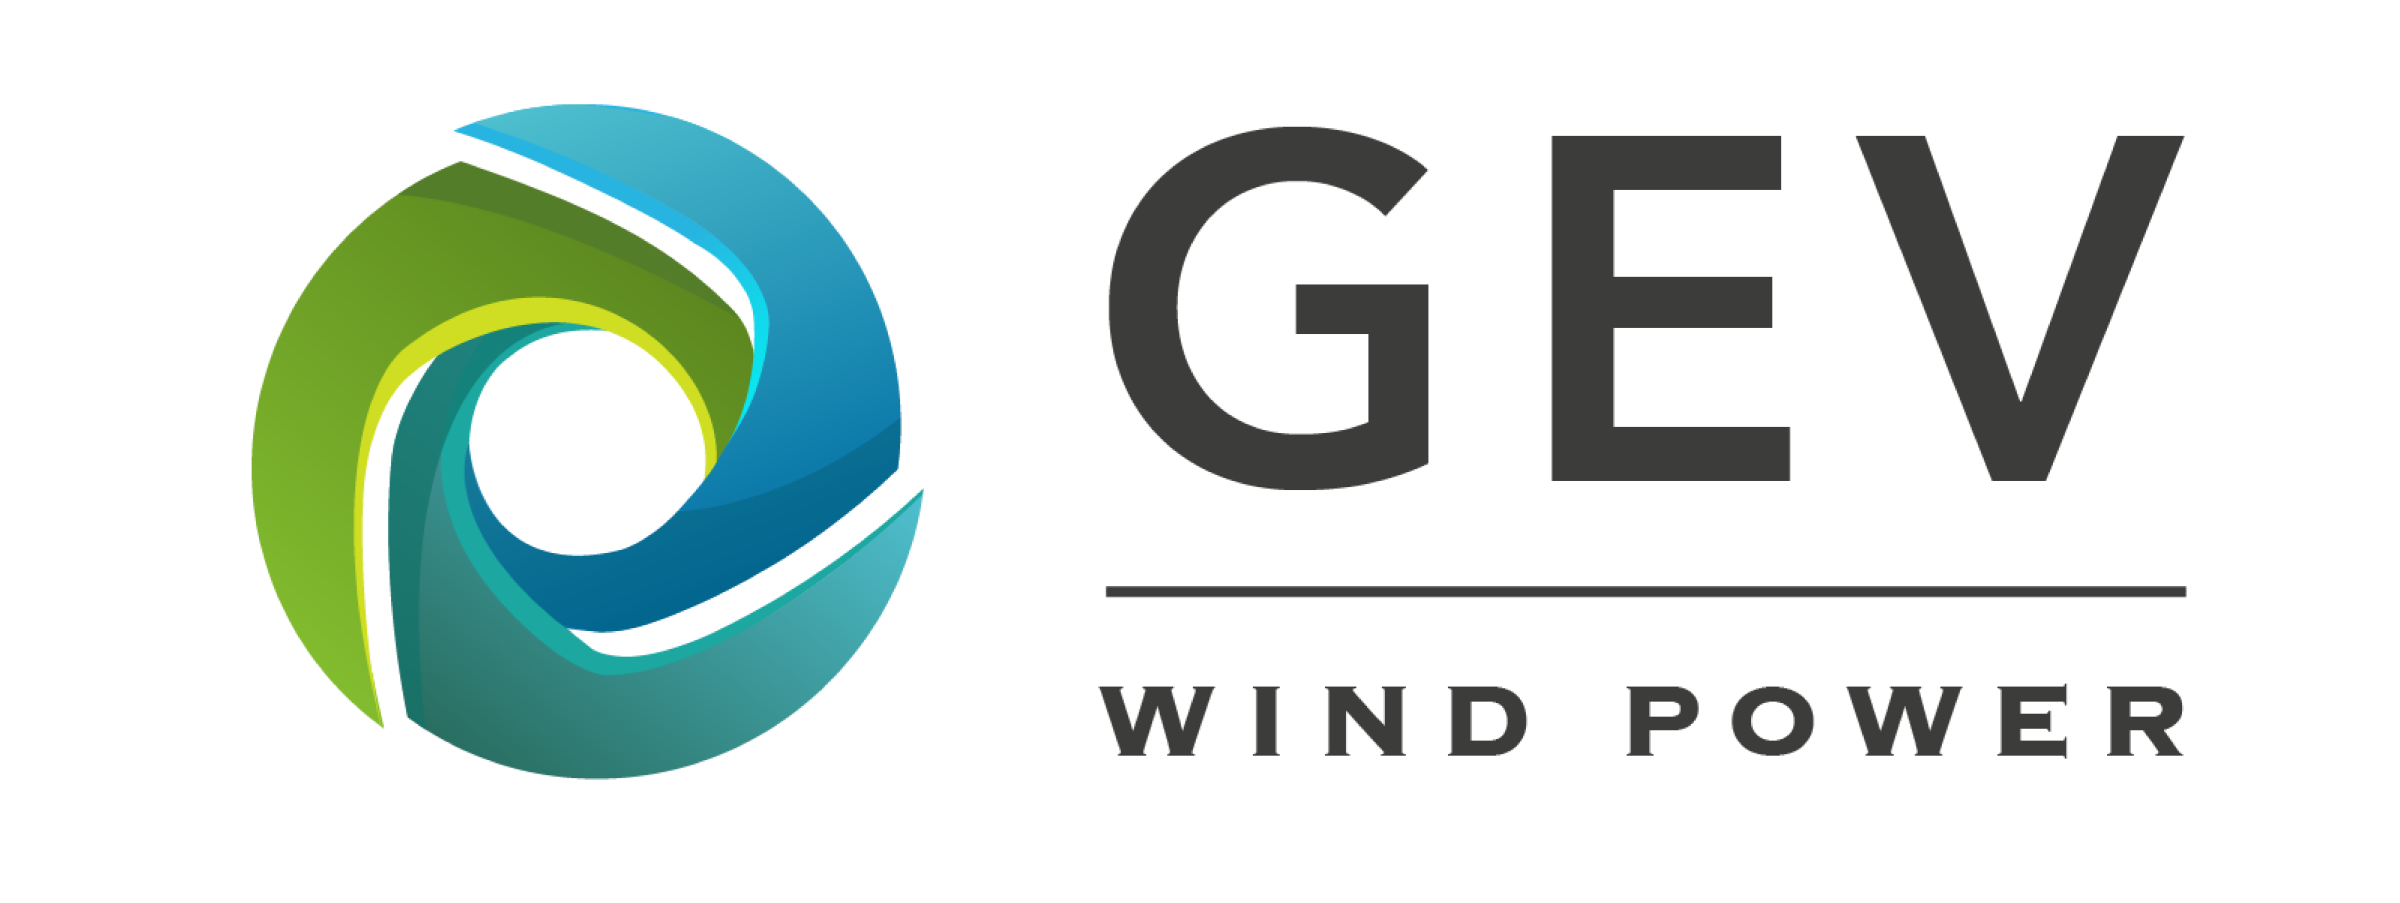 Wind power - Wikipedia